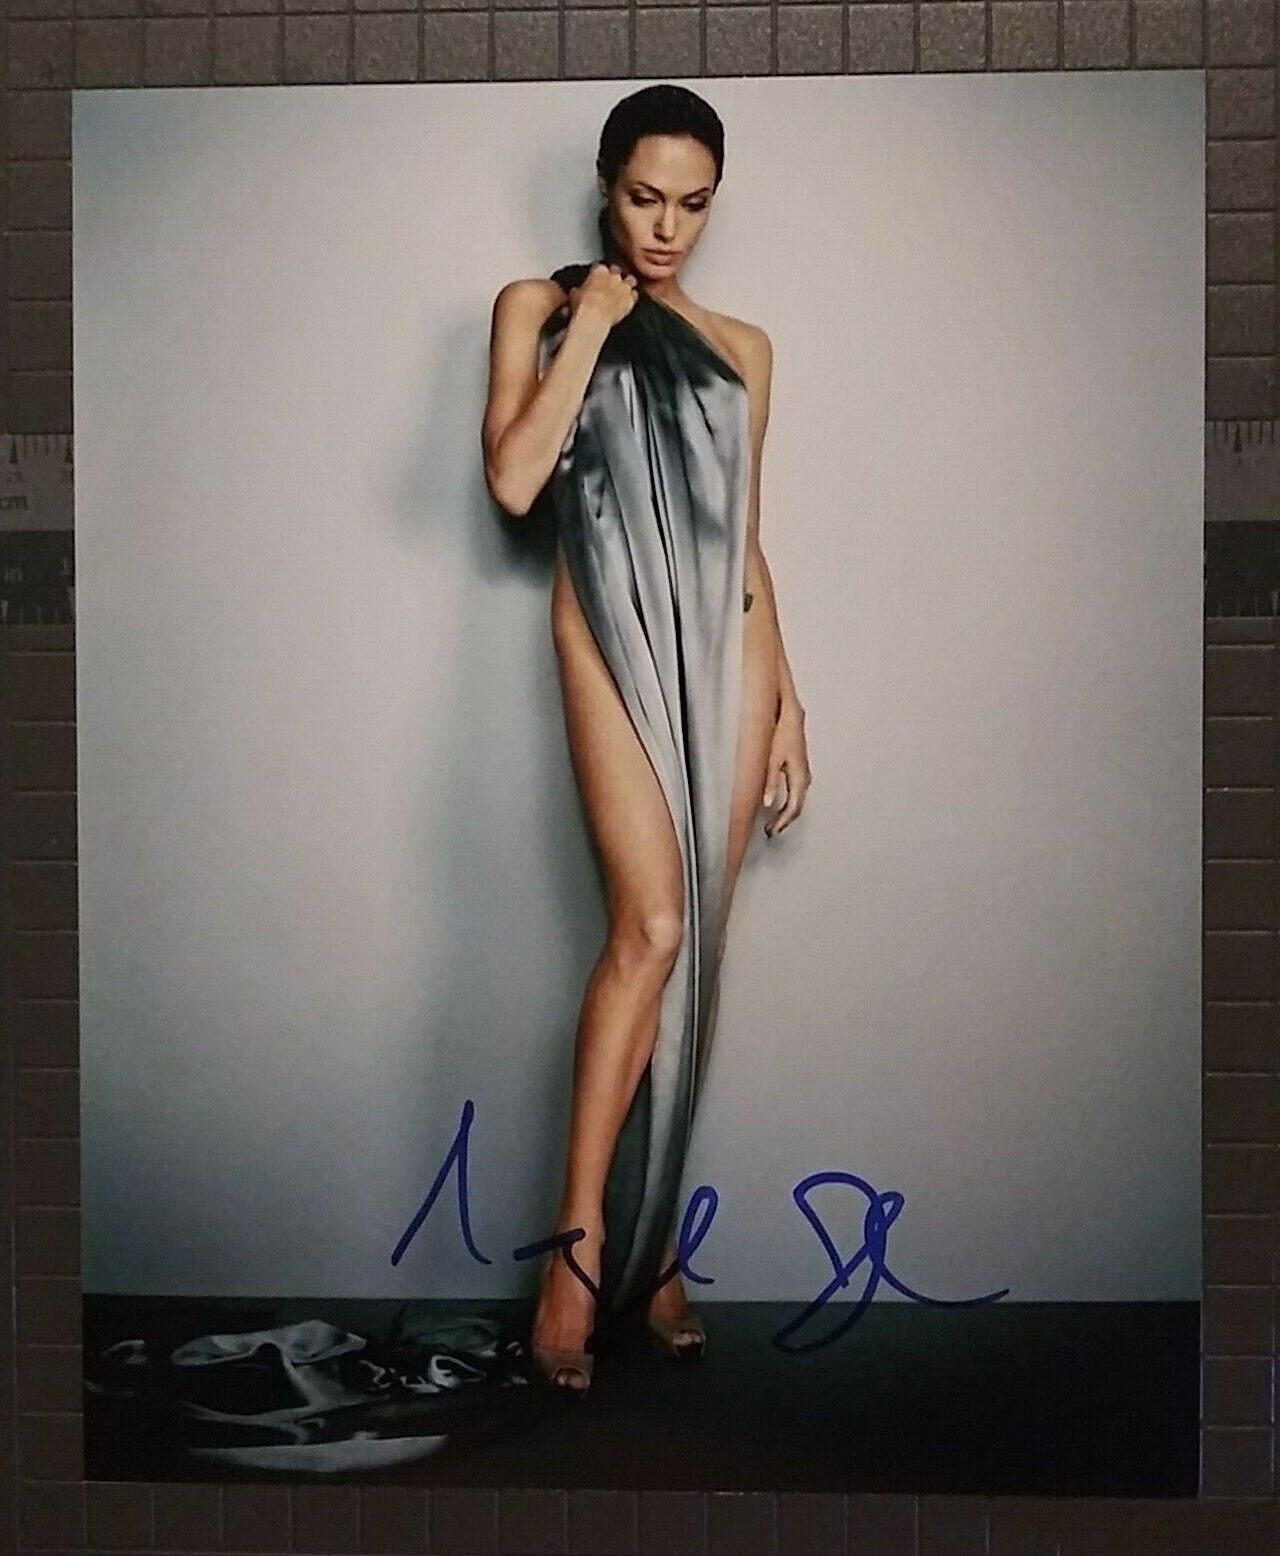 Angelina Jolie signed 8x10